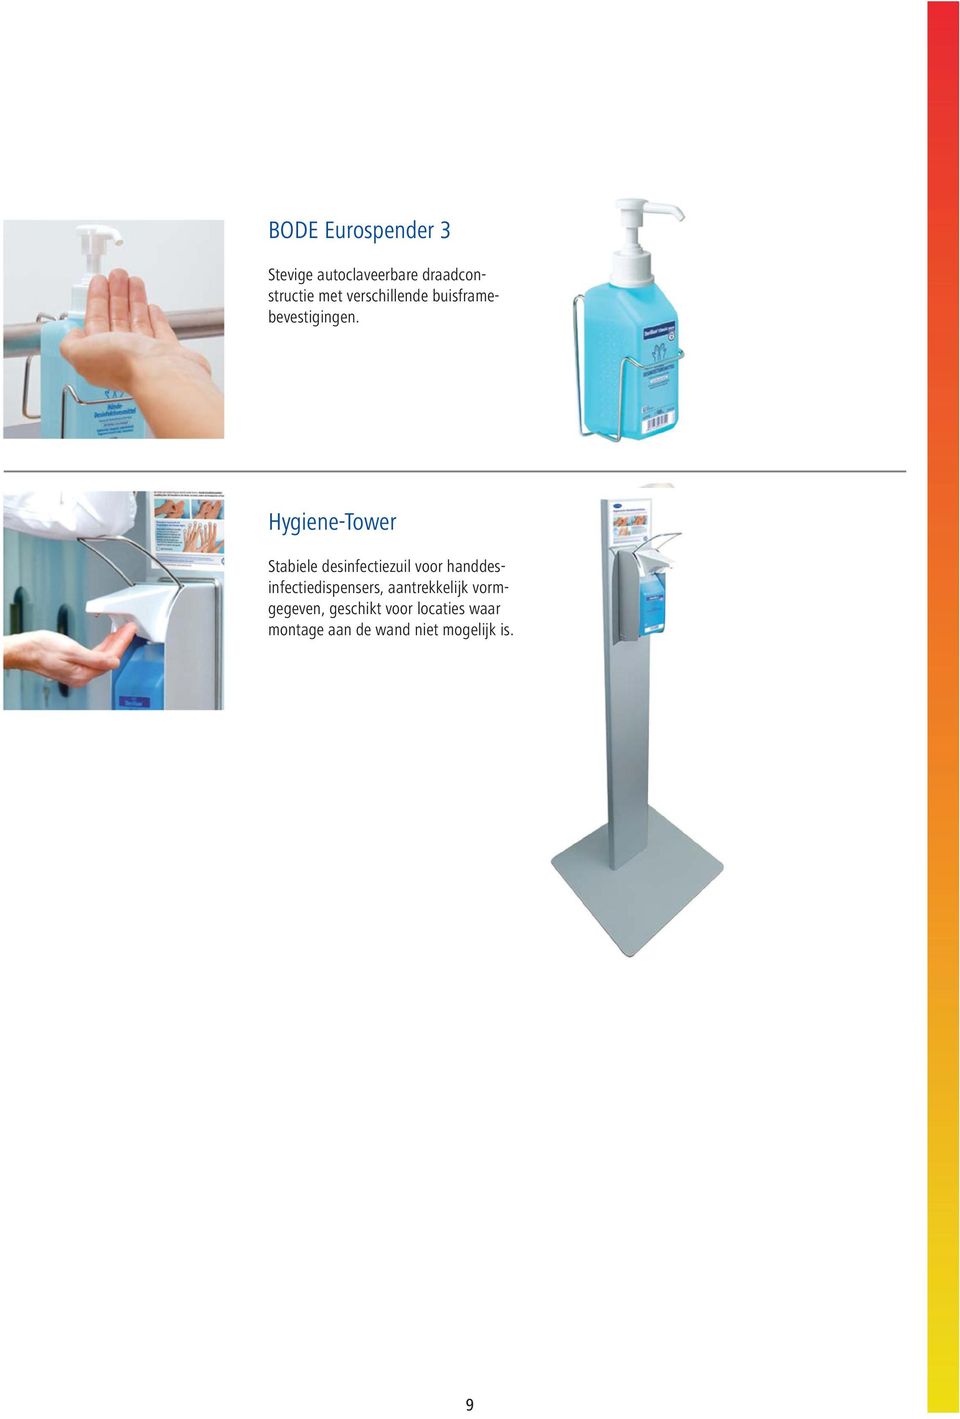 Hygiene-Tower Stabiele desinfectiezuil voor